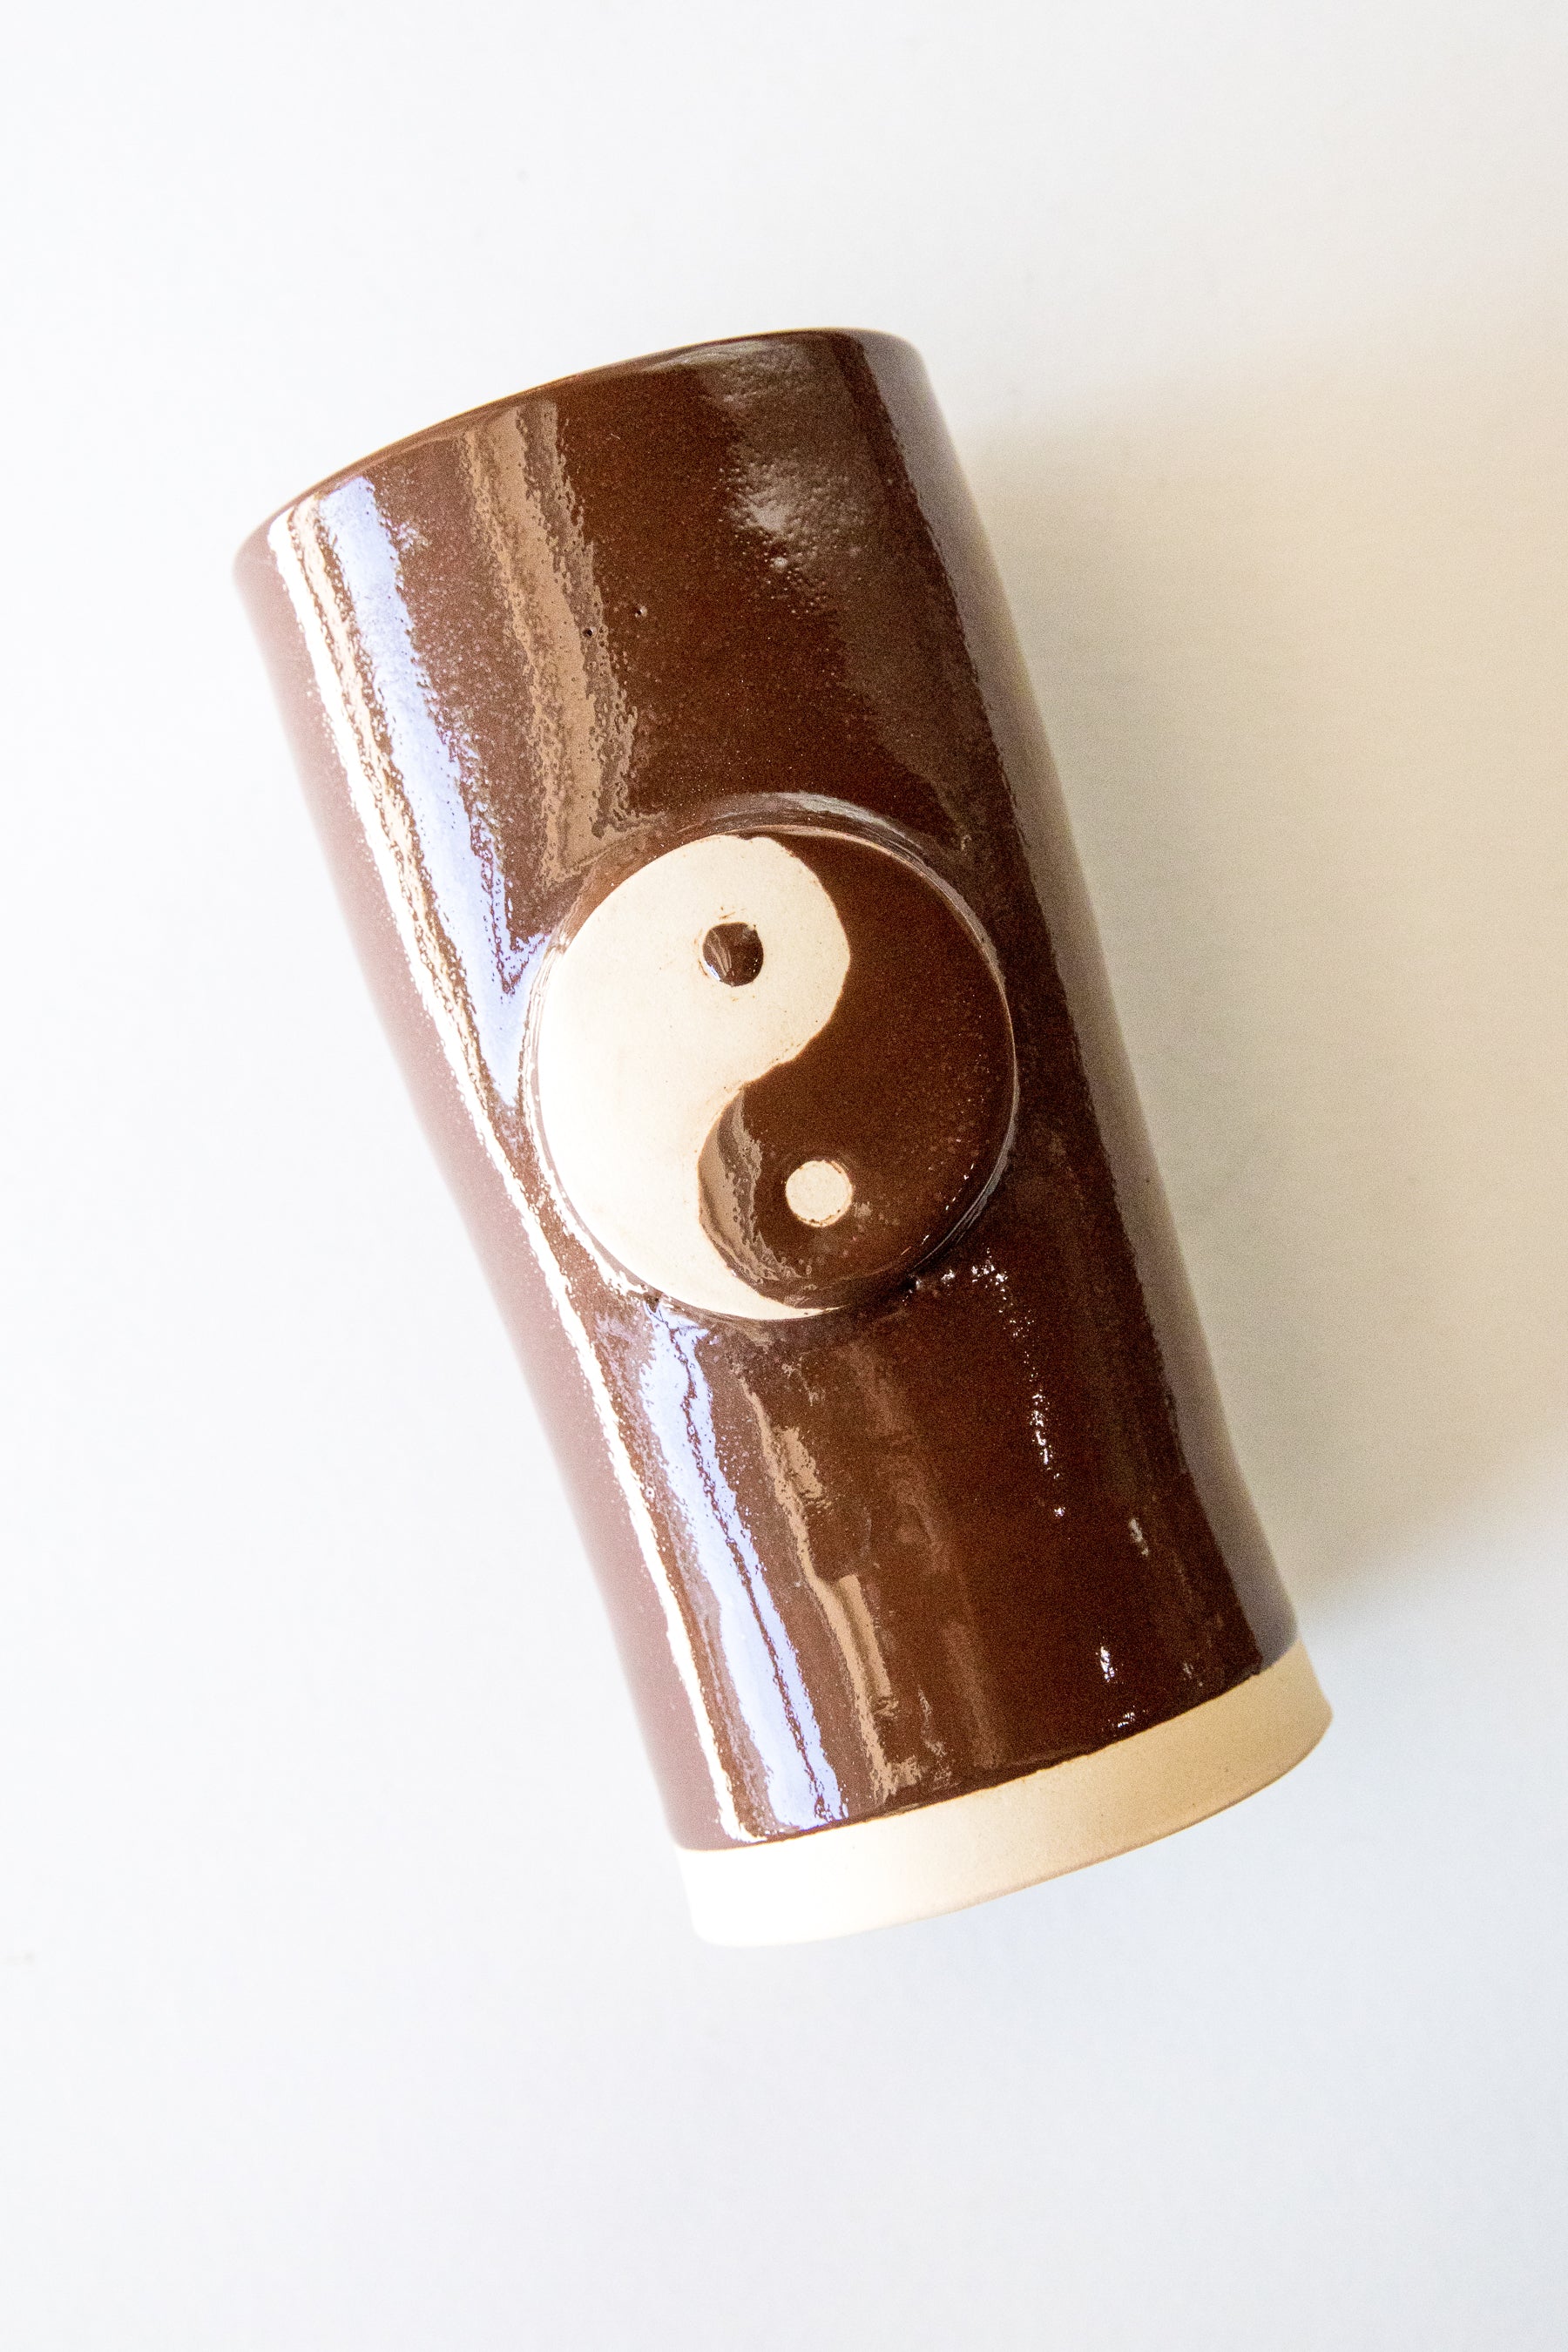 Chocolate Yin Yang Vase